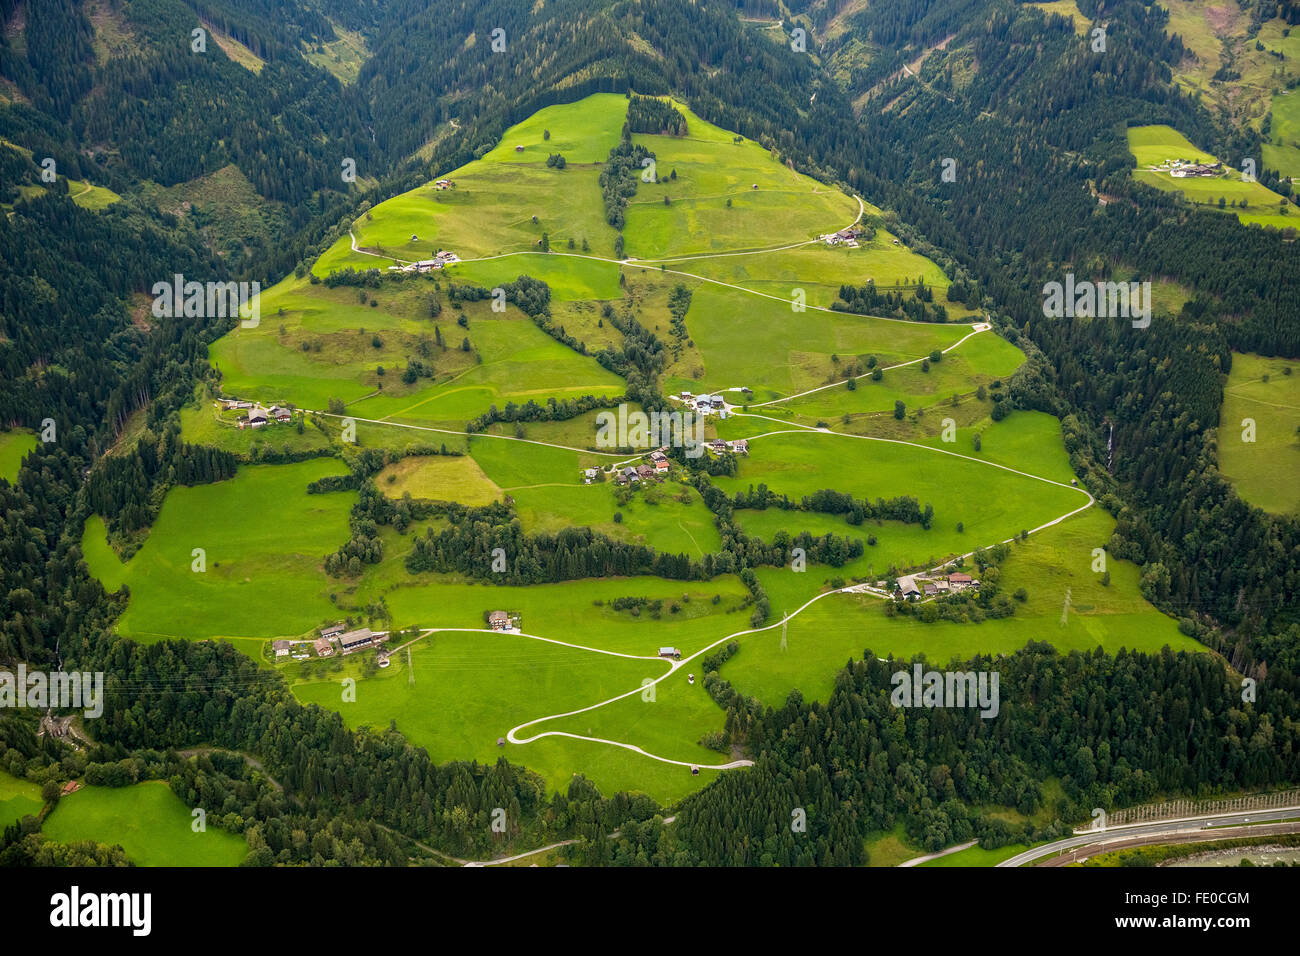 Aerial, Alps, alpine meadows with serpentine paths, Höf, Salzburg, Austria, Europe, Aerial view, birds-eyes view, aerial view, Stock Photo